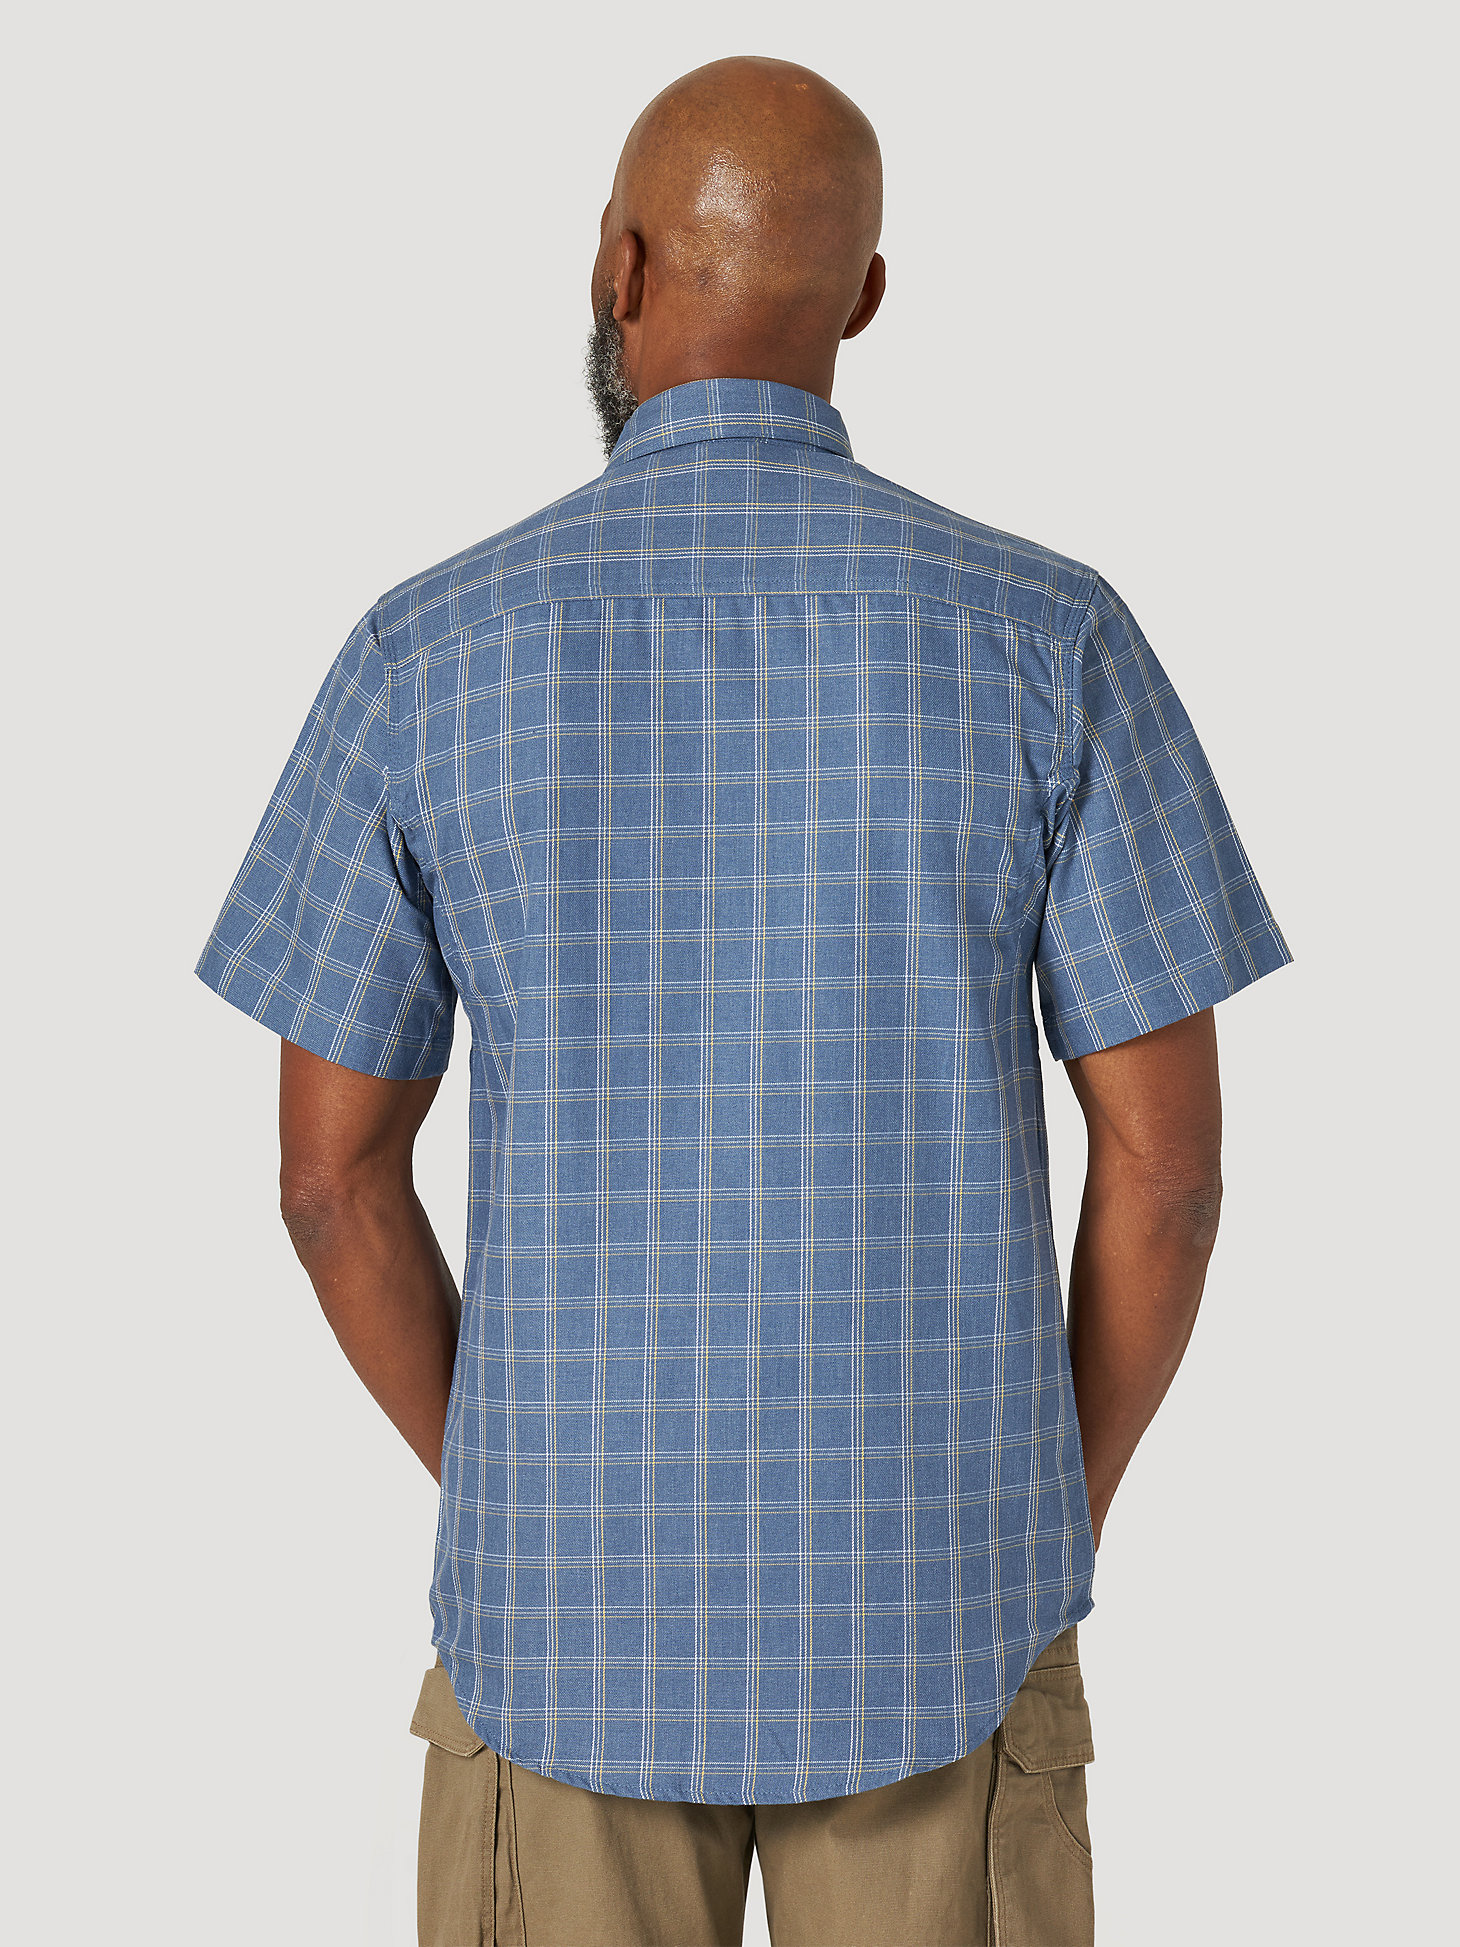 Wrangler® RIGGS Workwear® Plaid Work Shirt in Indigo Plaid alternative view 1